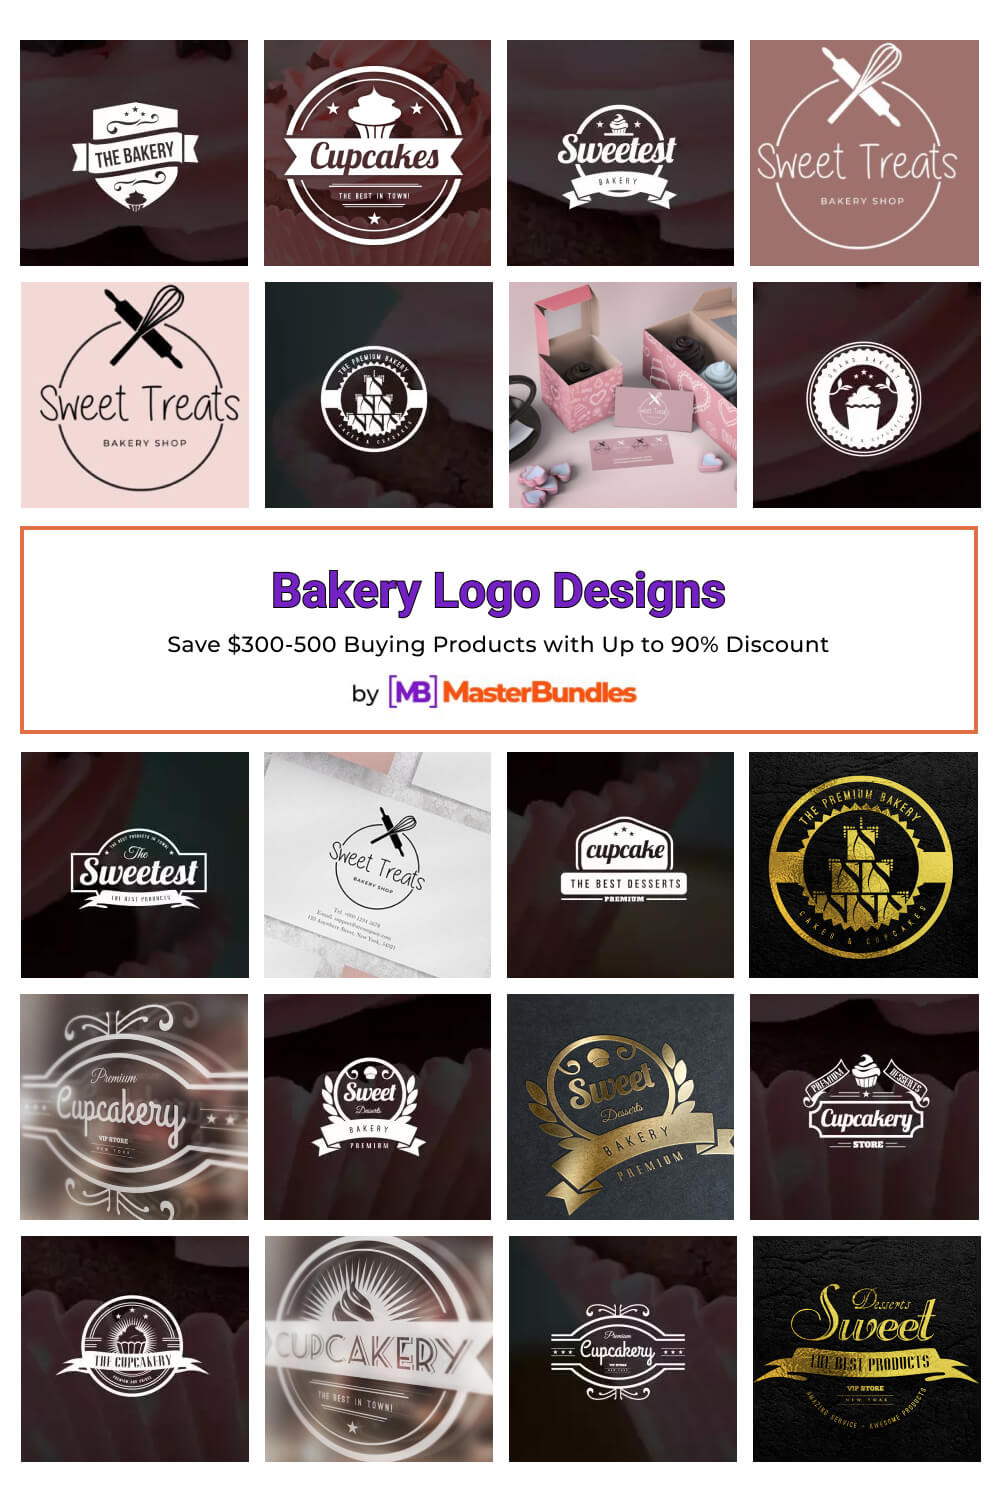 bakery logo designs pinterest image.